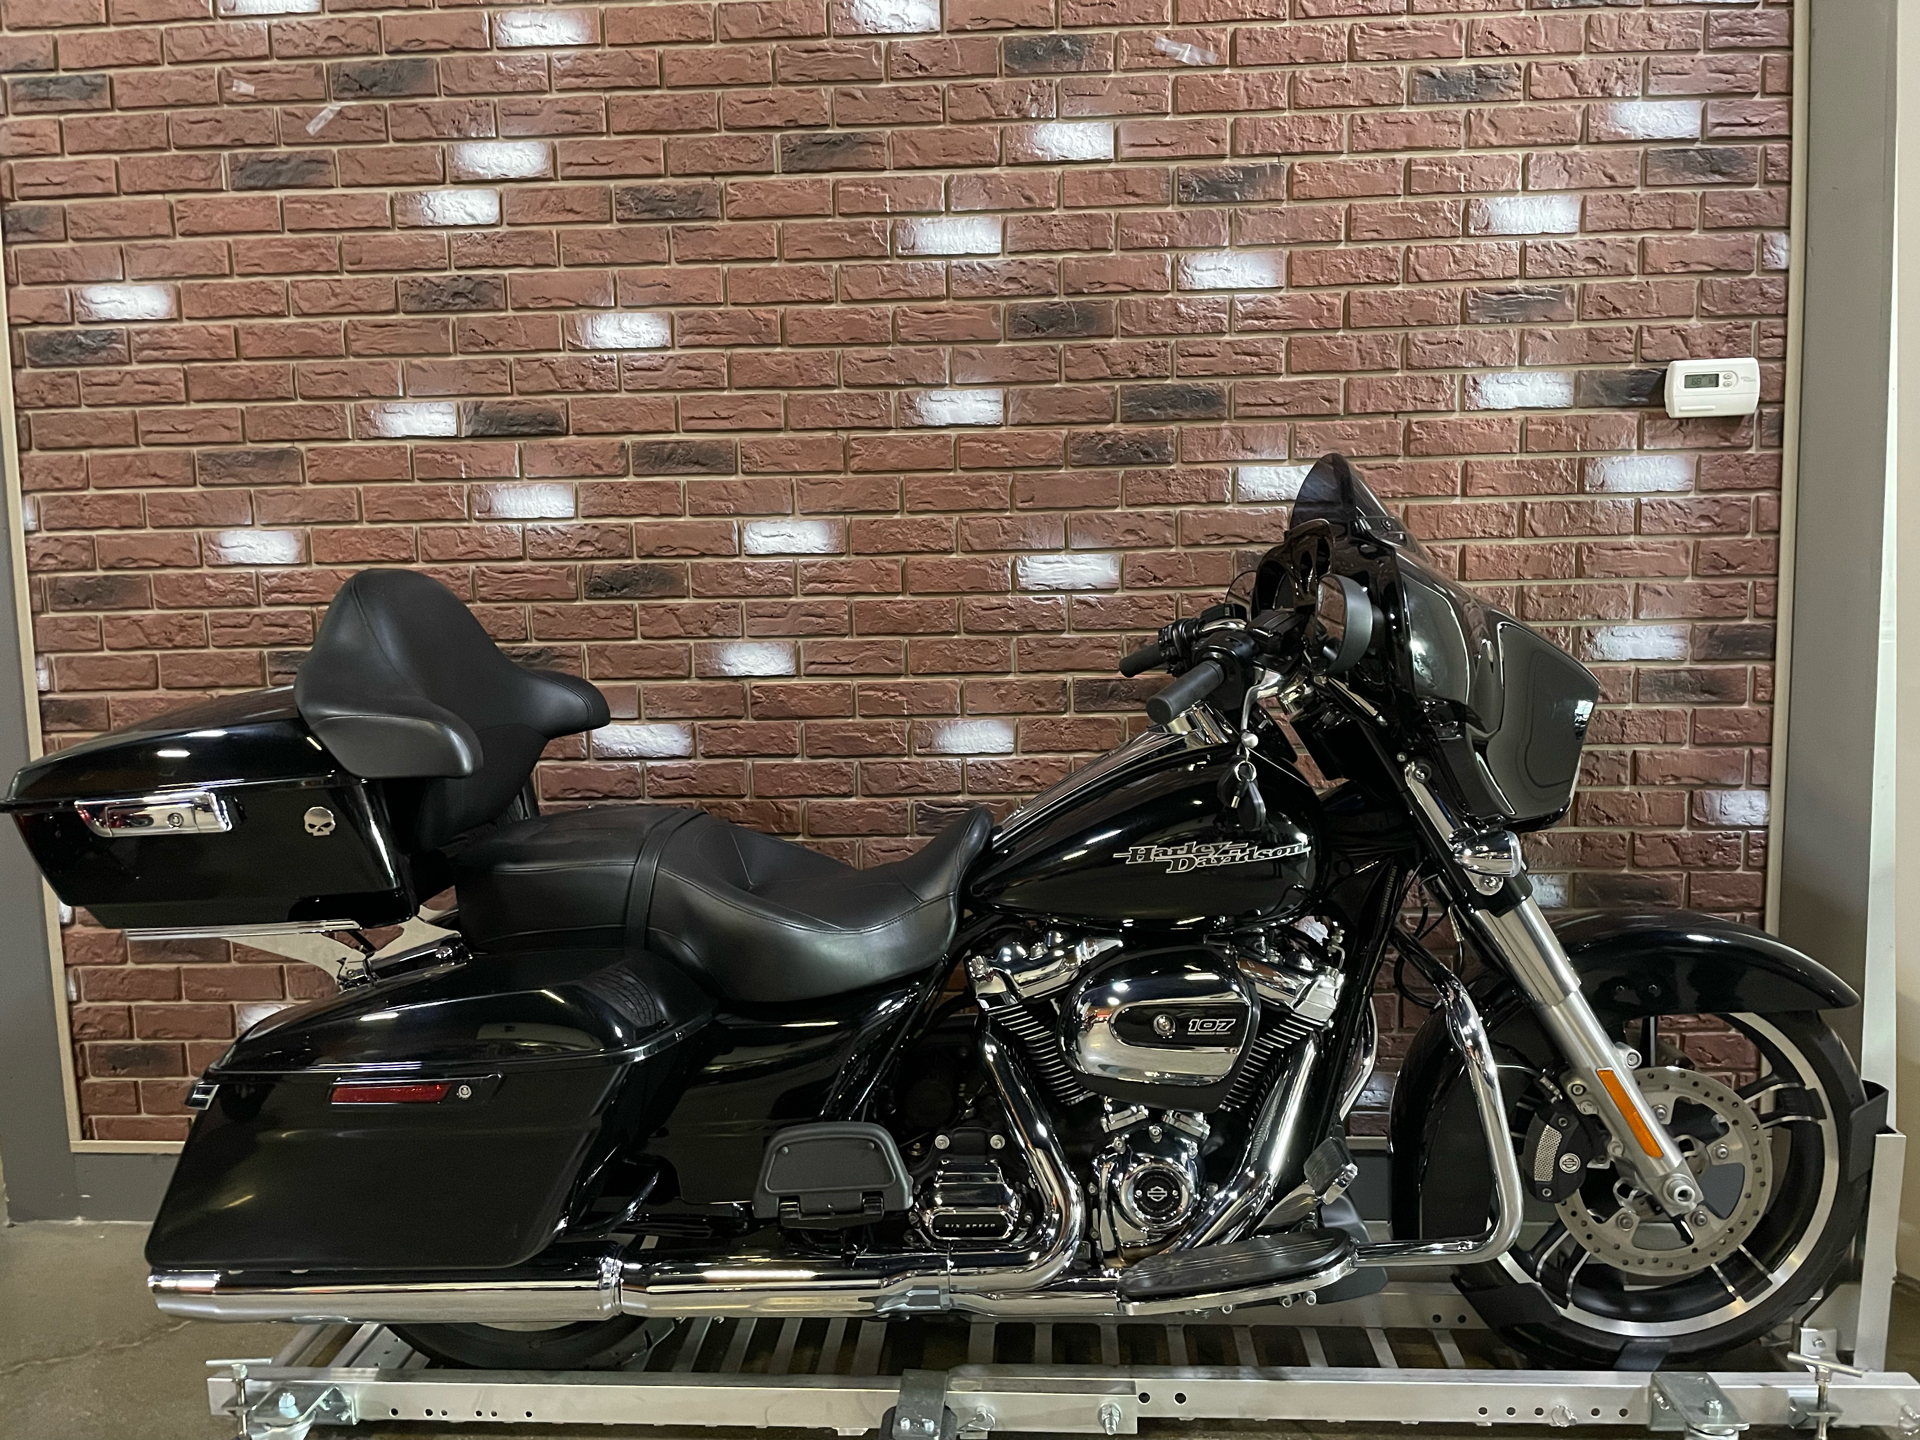 2017 Harley-Davidson Street Glide Special in Dimondale, Michigan - Photo 1